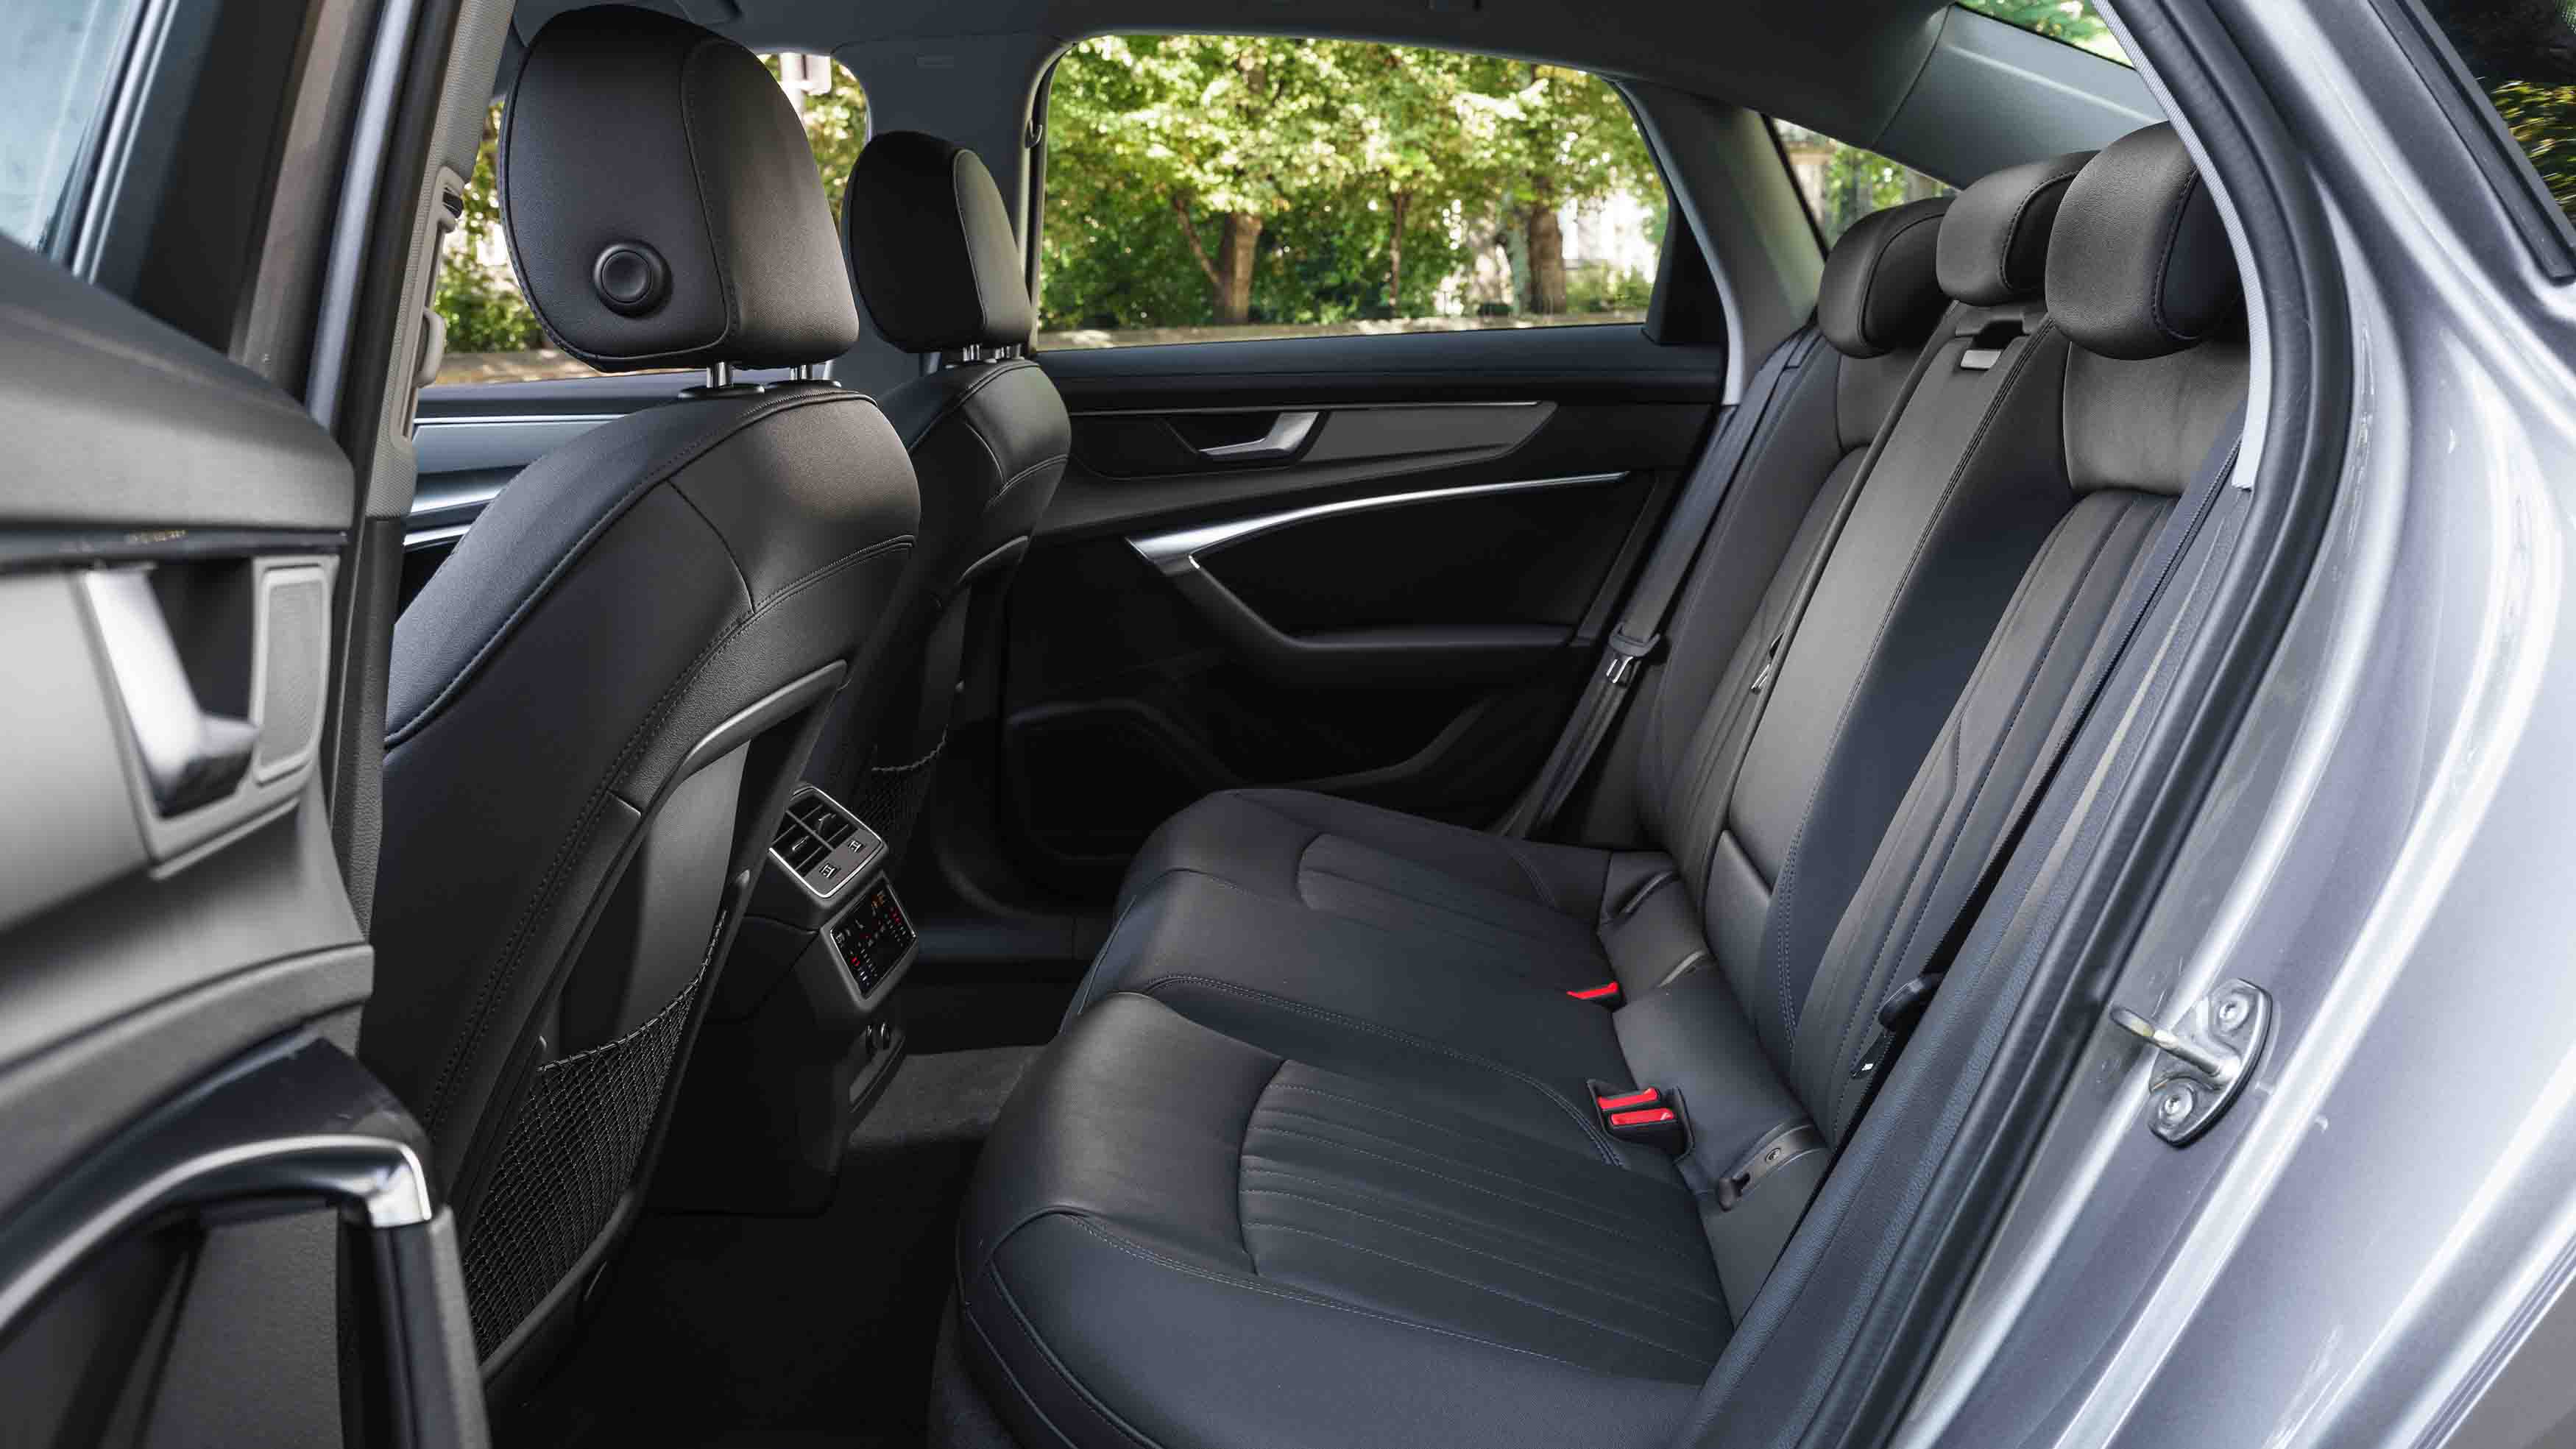 Audi A6 rear seat space